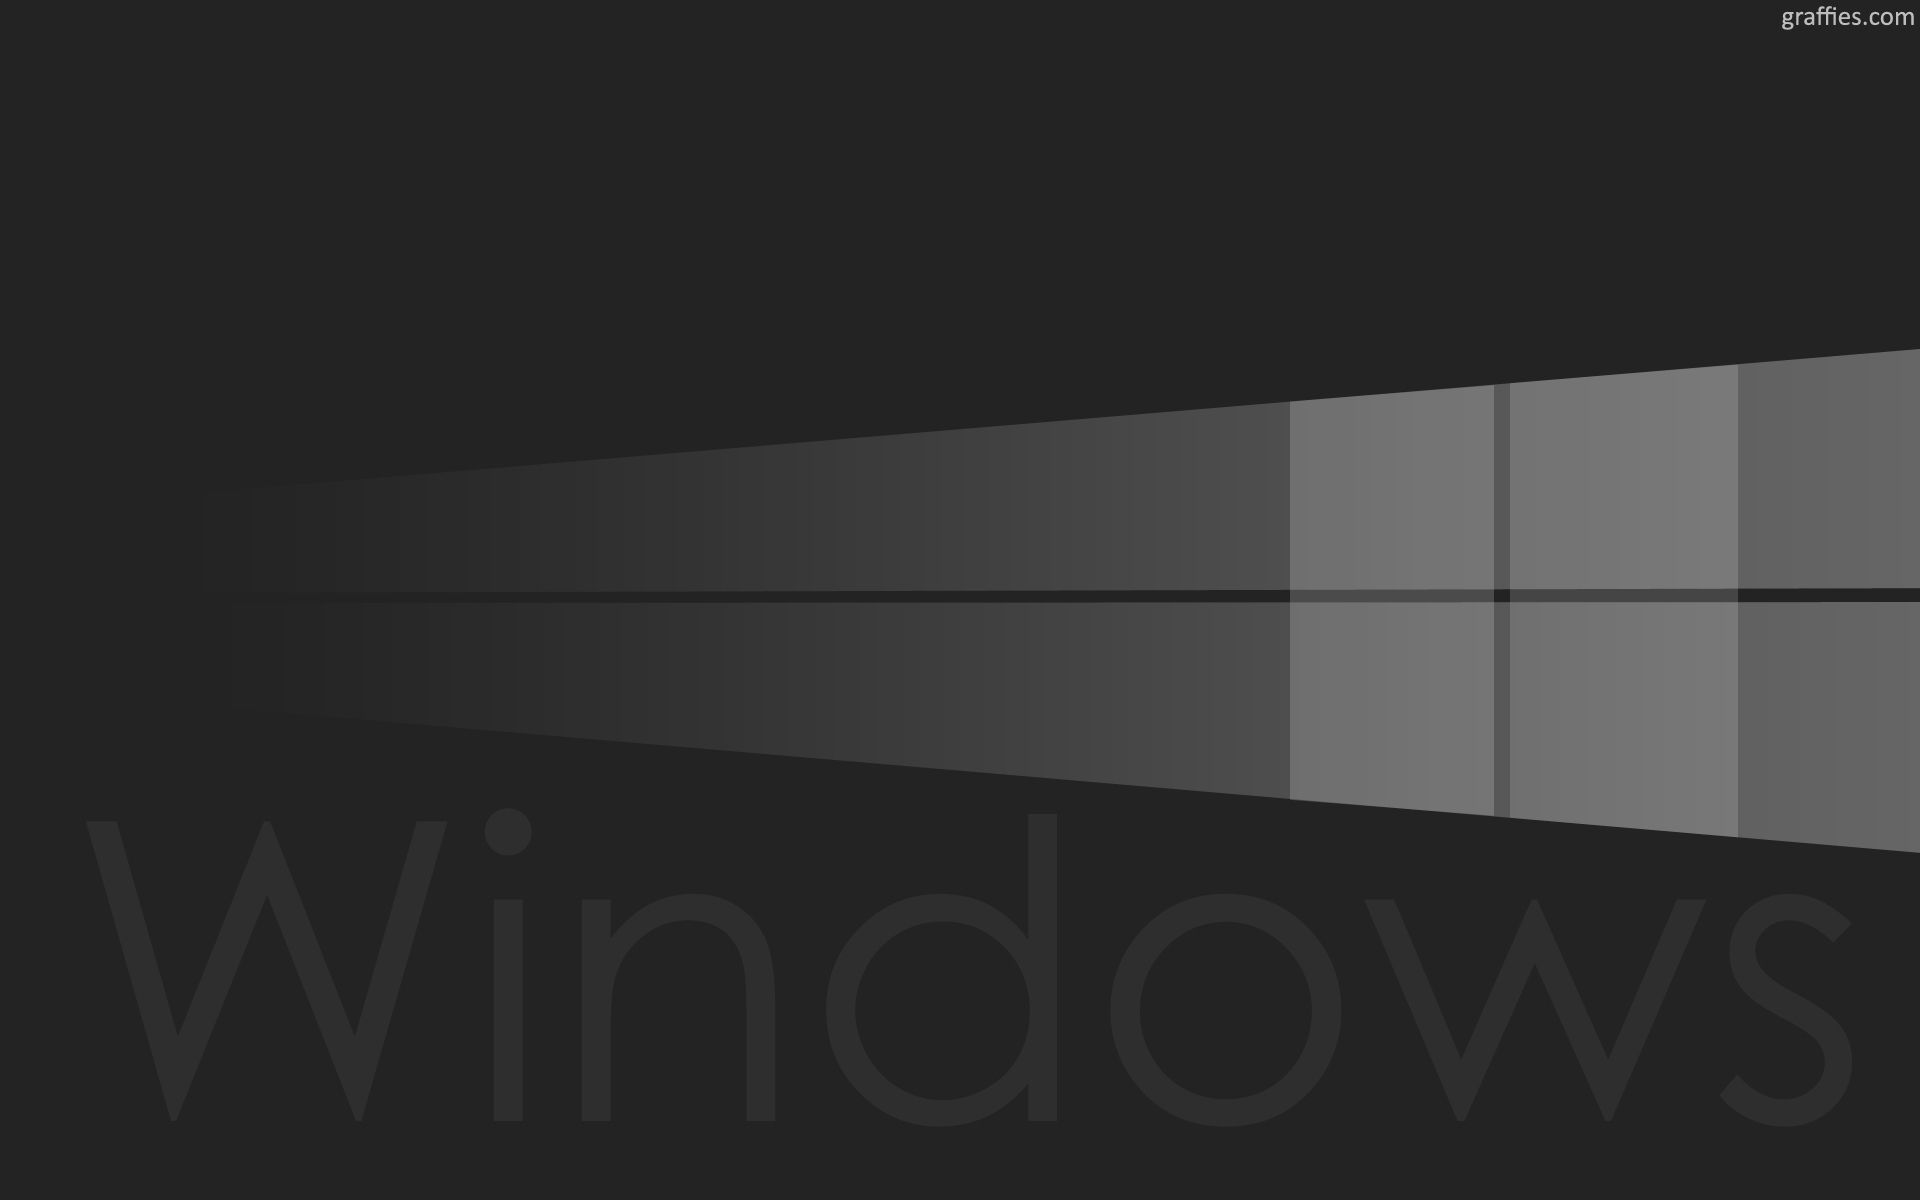 Windows 8 Black Wallpaper 2014 - Graffies